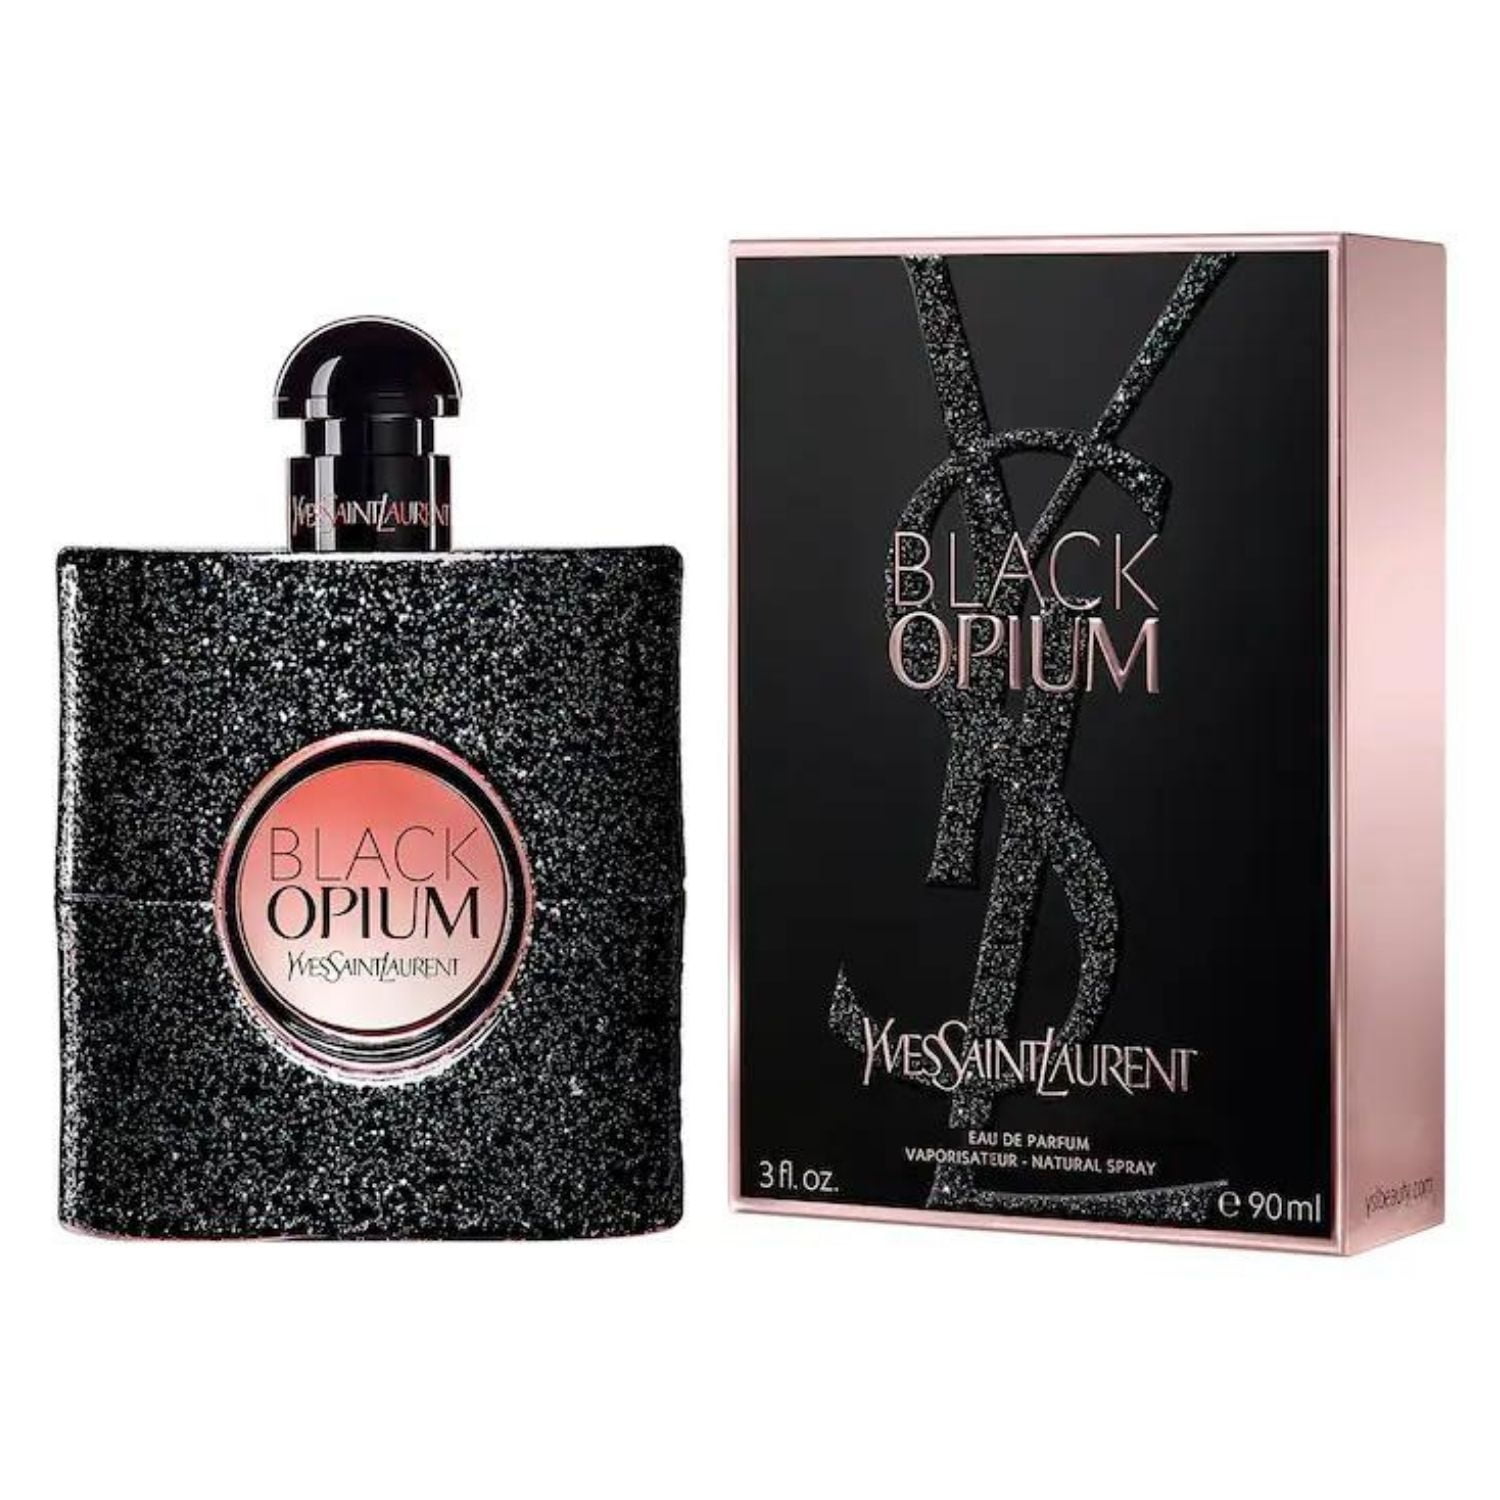 Yves Saint Laurent Black Opium Perfume edt Women Spray 3.0 oz Box As Shown